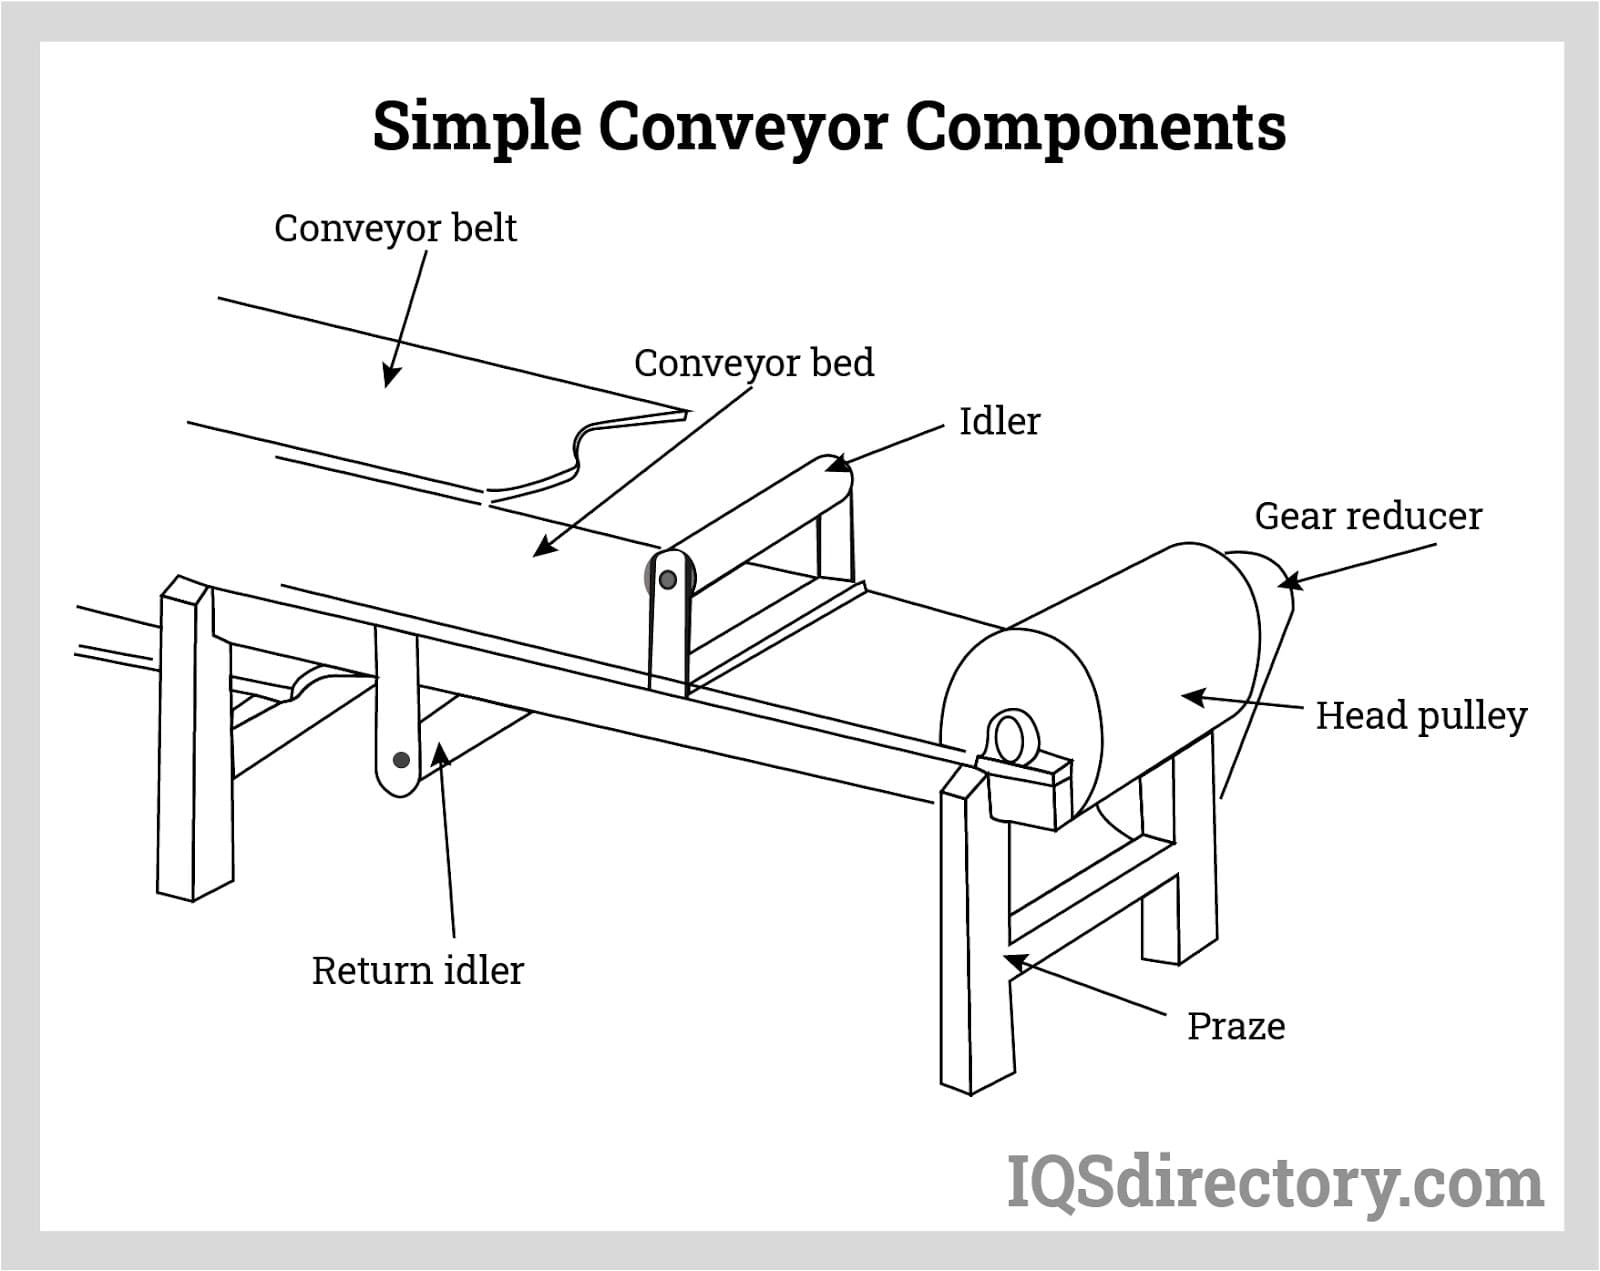 Simple Conveyor Components